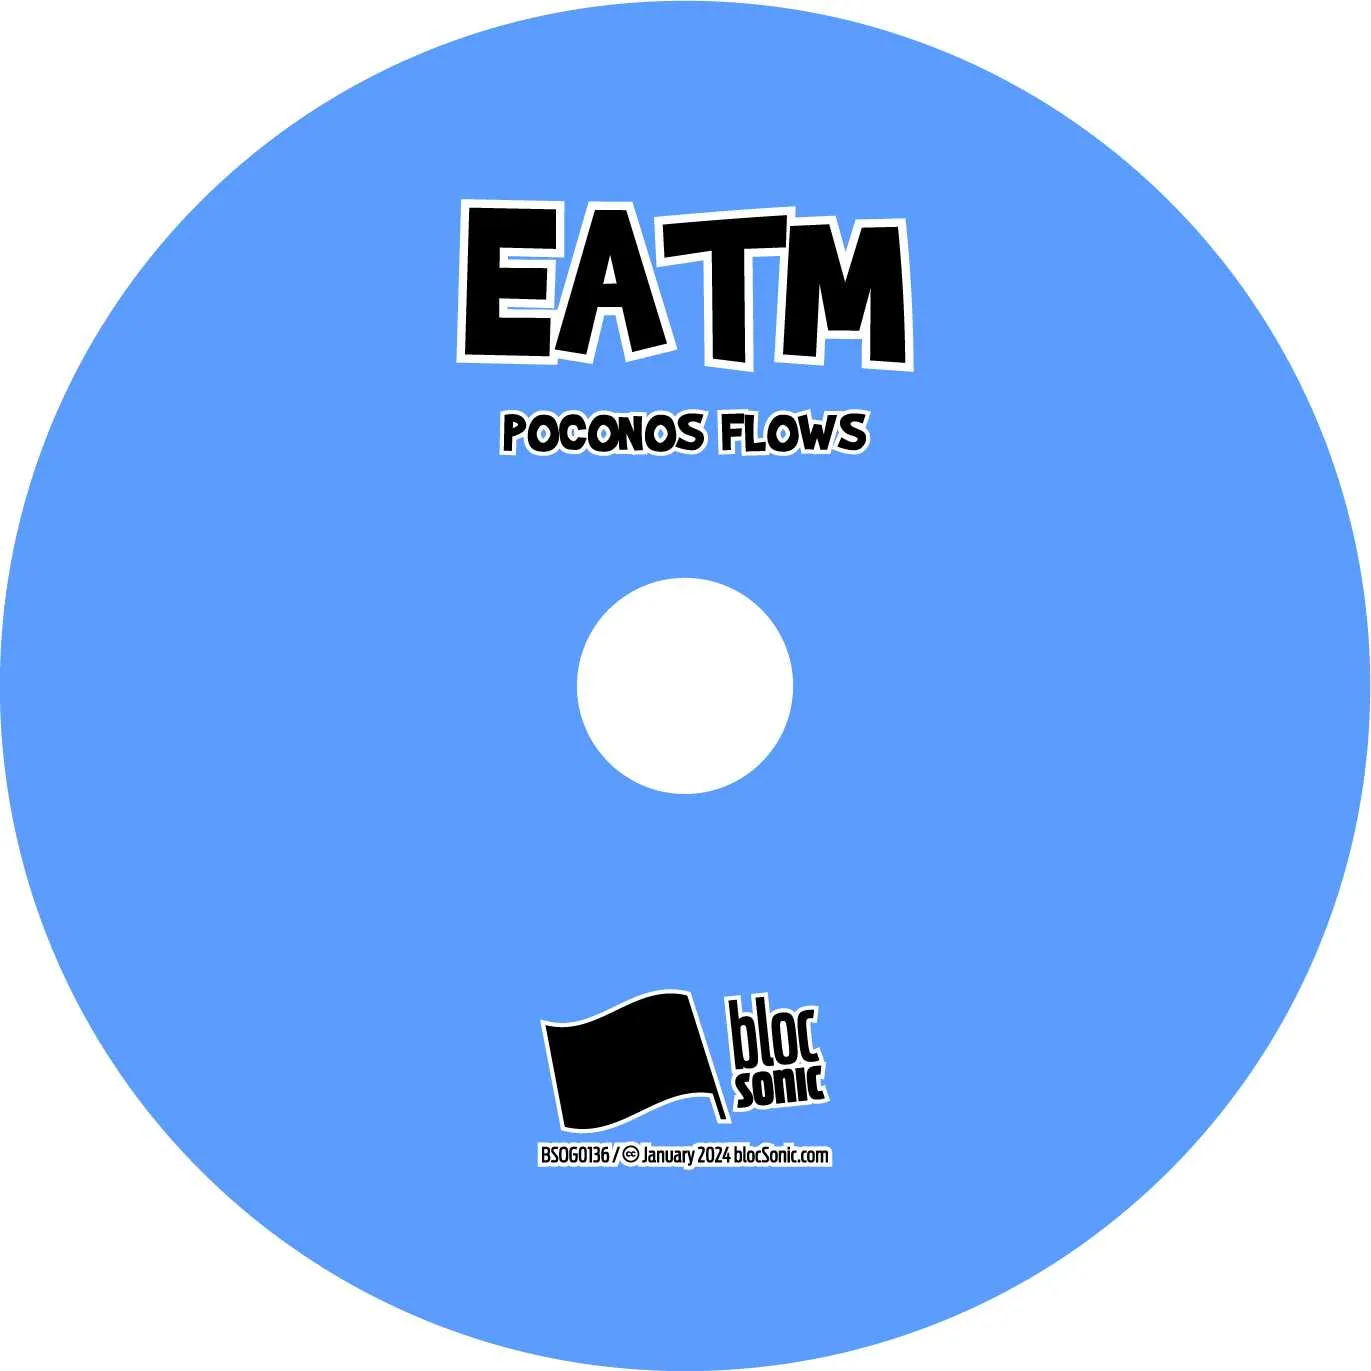 Album disc for “Poconos Flows” by EATM